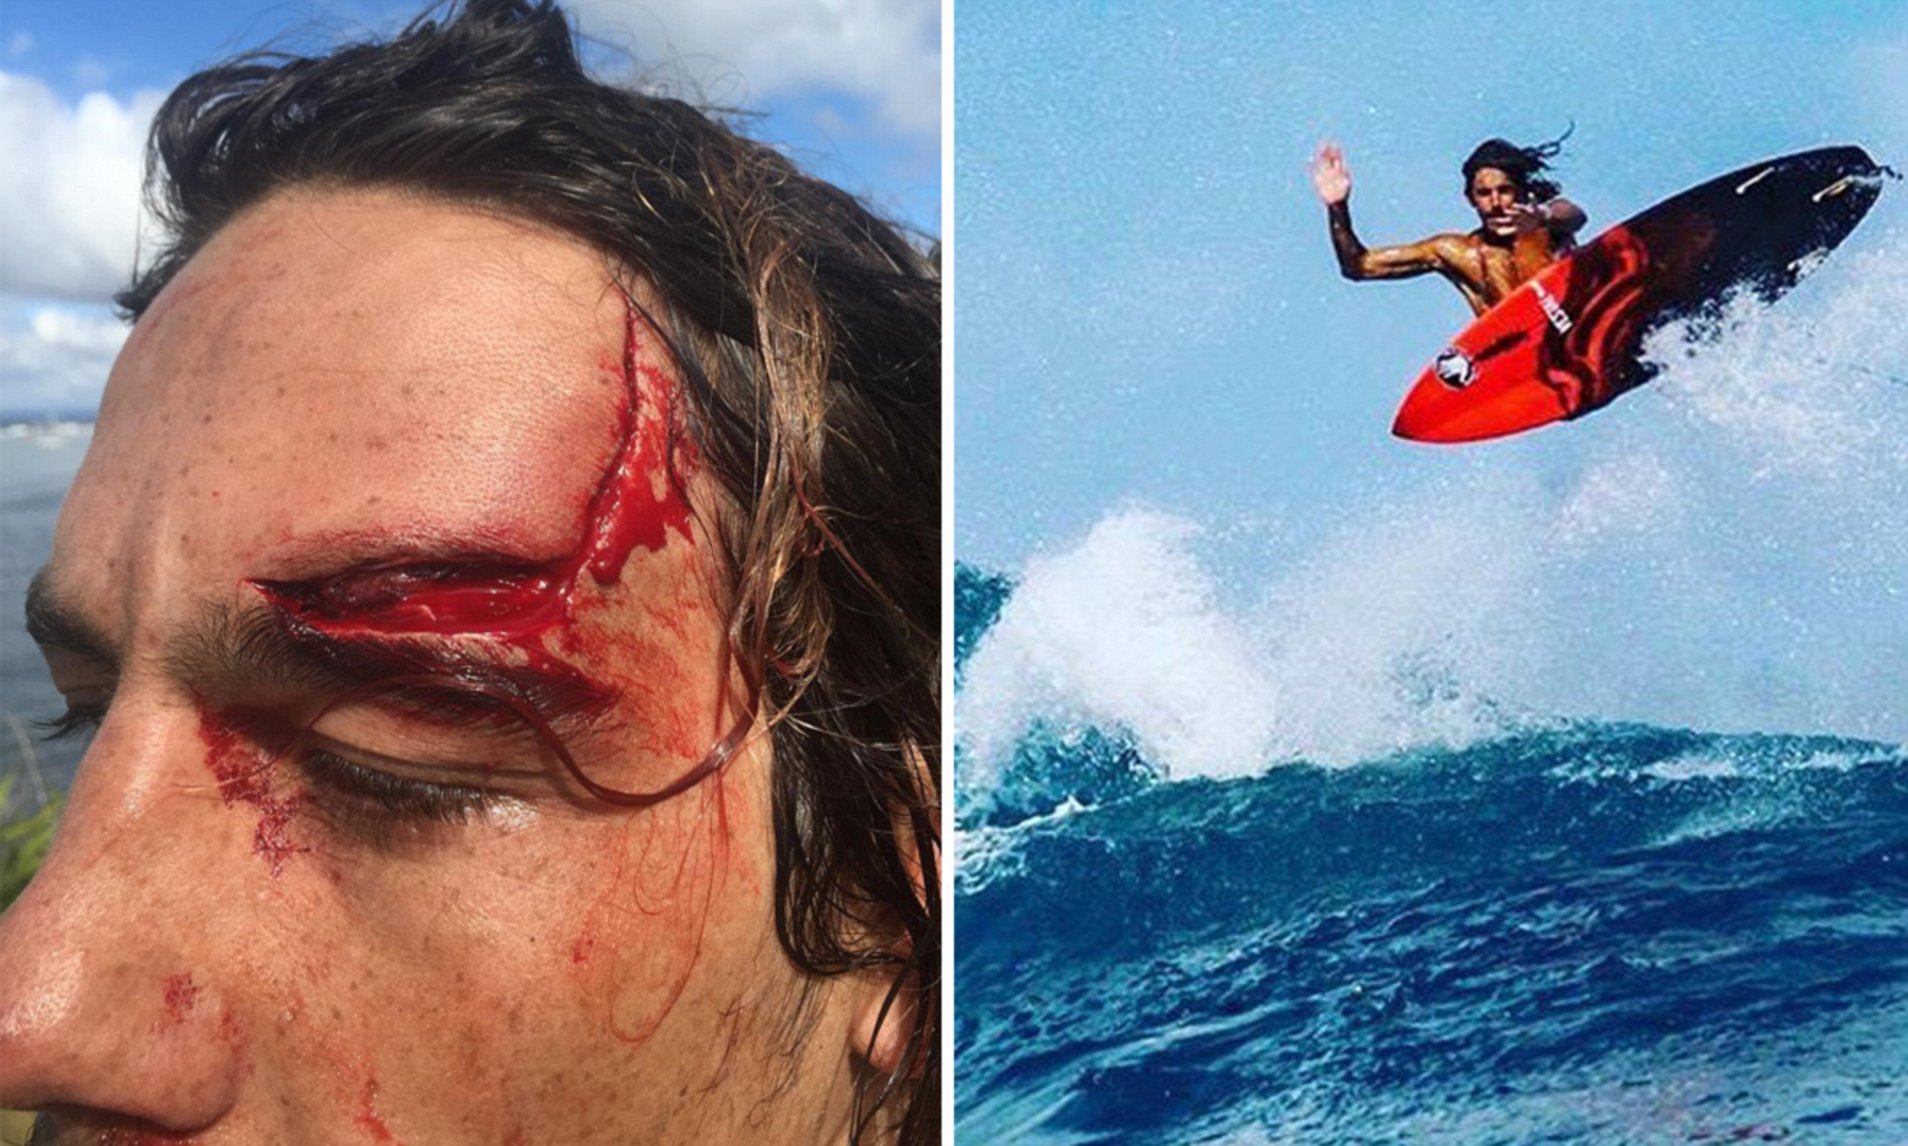 Injury of Head surfing